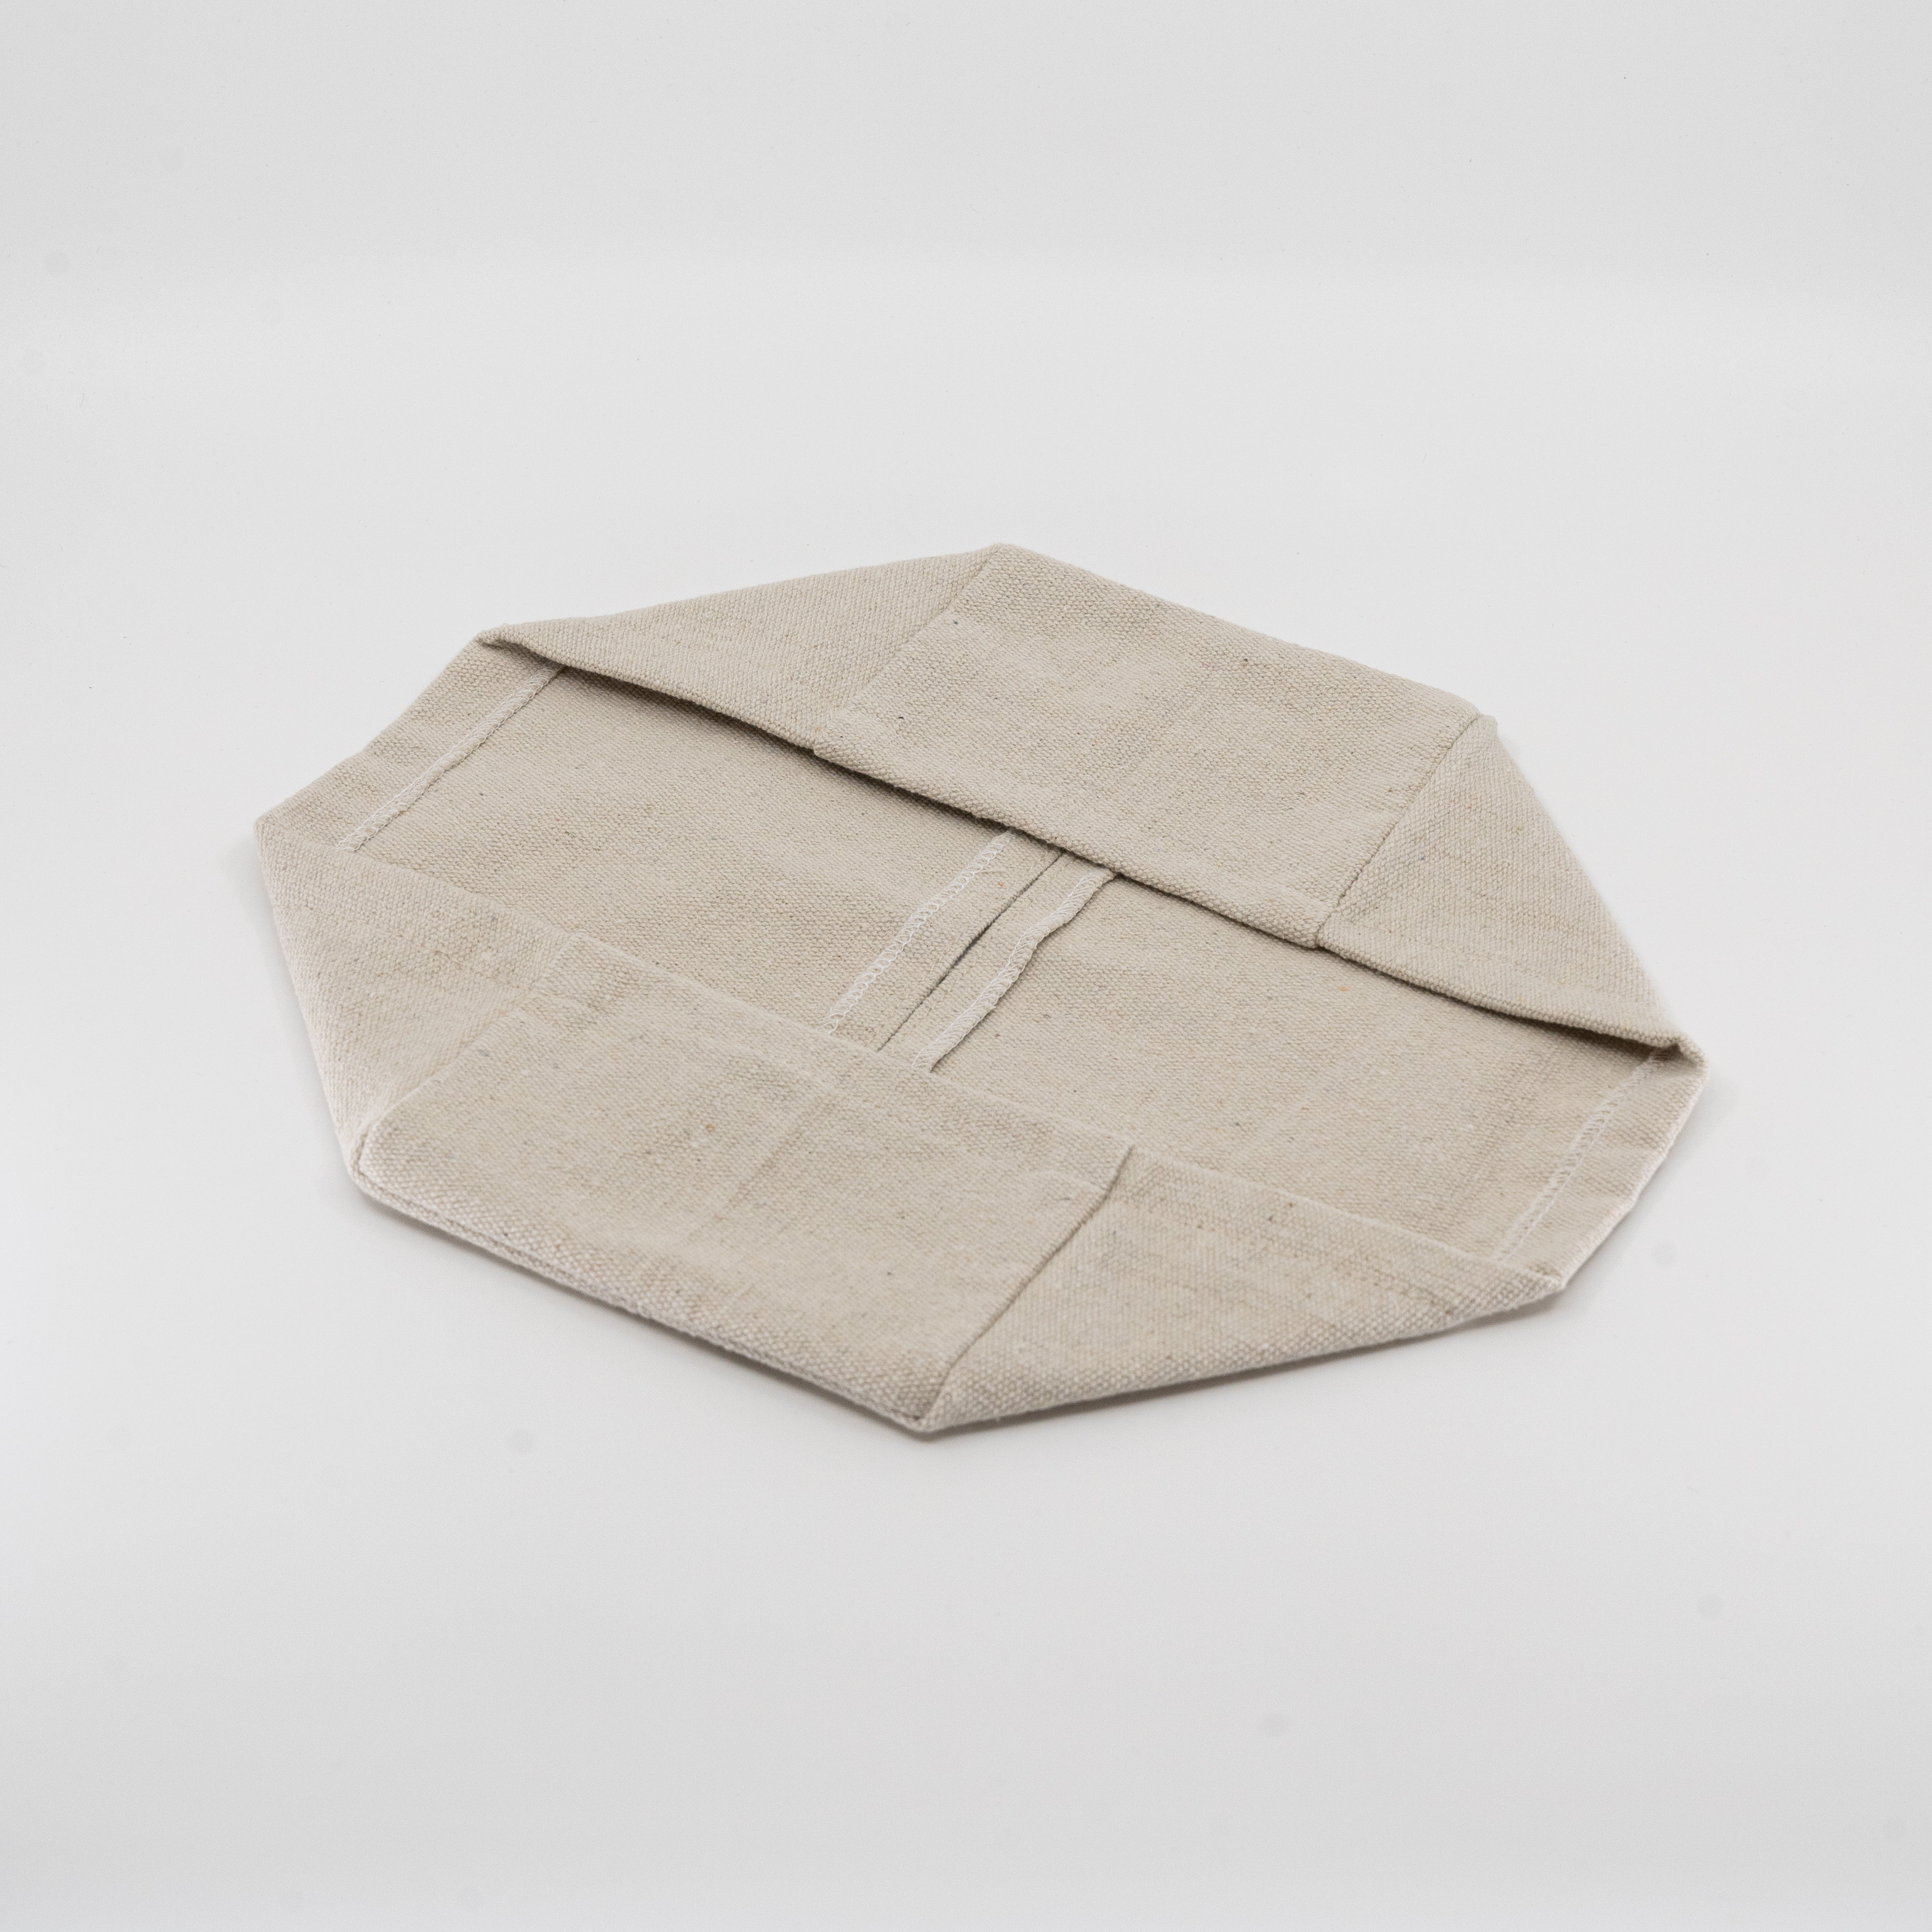 Box Tissue Holder  - WS Living - UAE - Tissue Box Holder Wood and steel Furnitures - Dubai